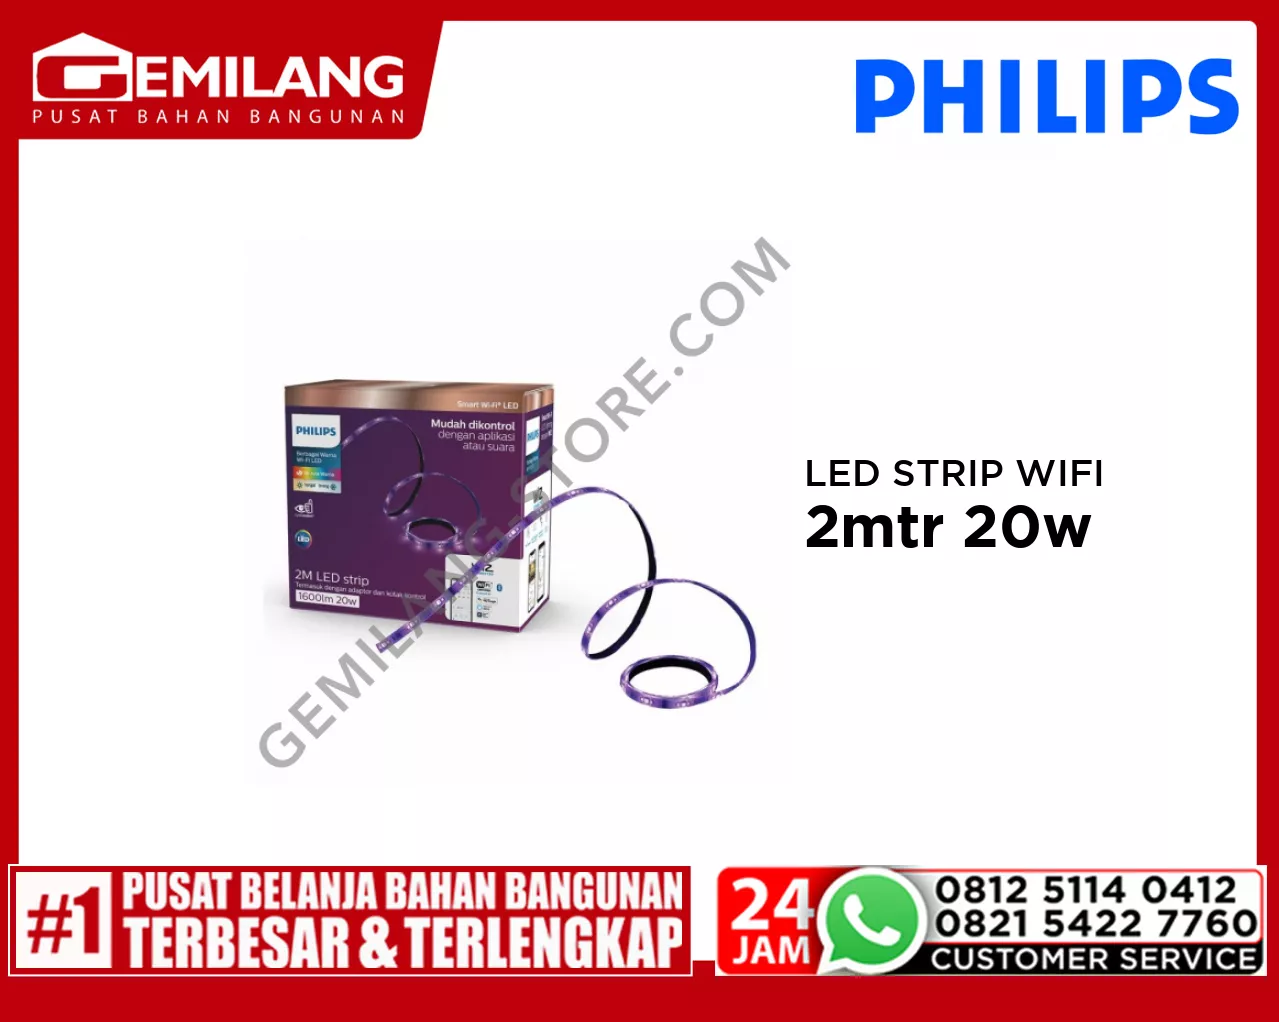 PHILIPS LED STRIP WIFI 1600 LM 2mtr 20w